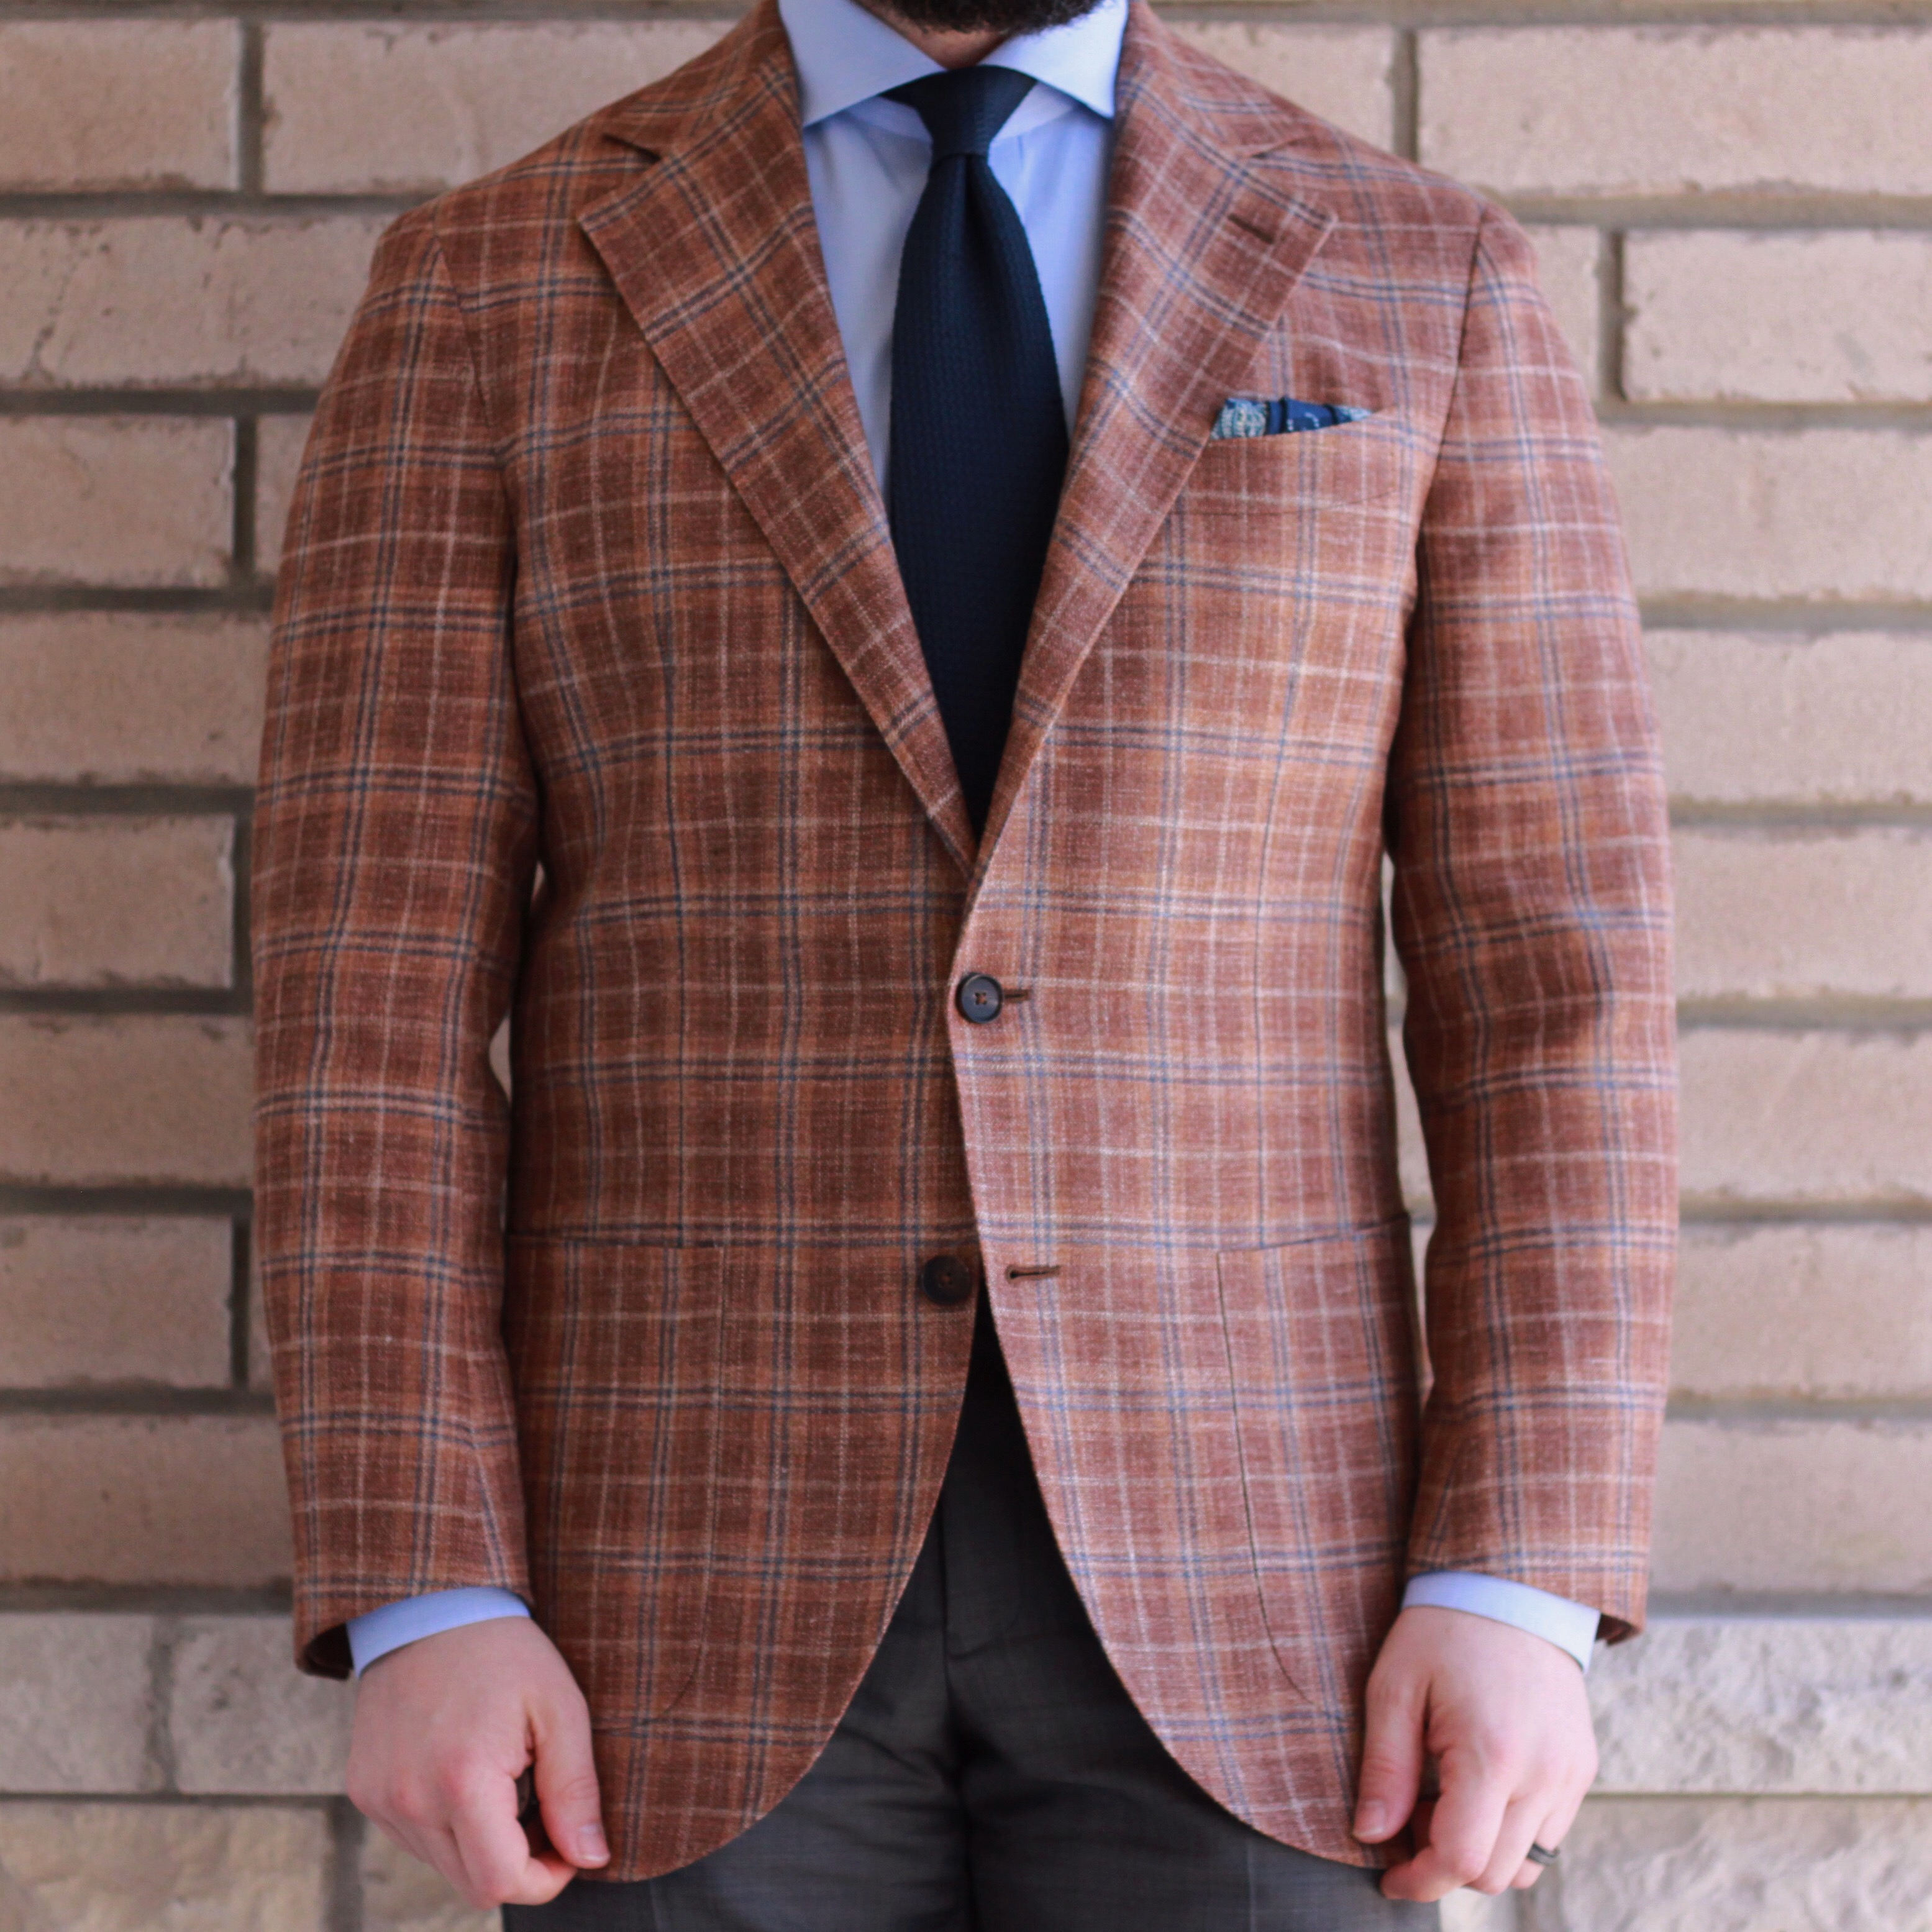 Spier & Mackay neapolitan, sport coat, e. thomas, pattern, spring/summer, odd jacket